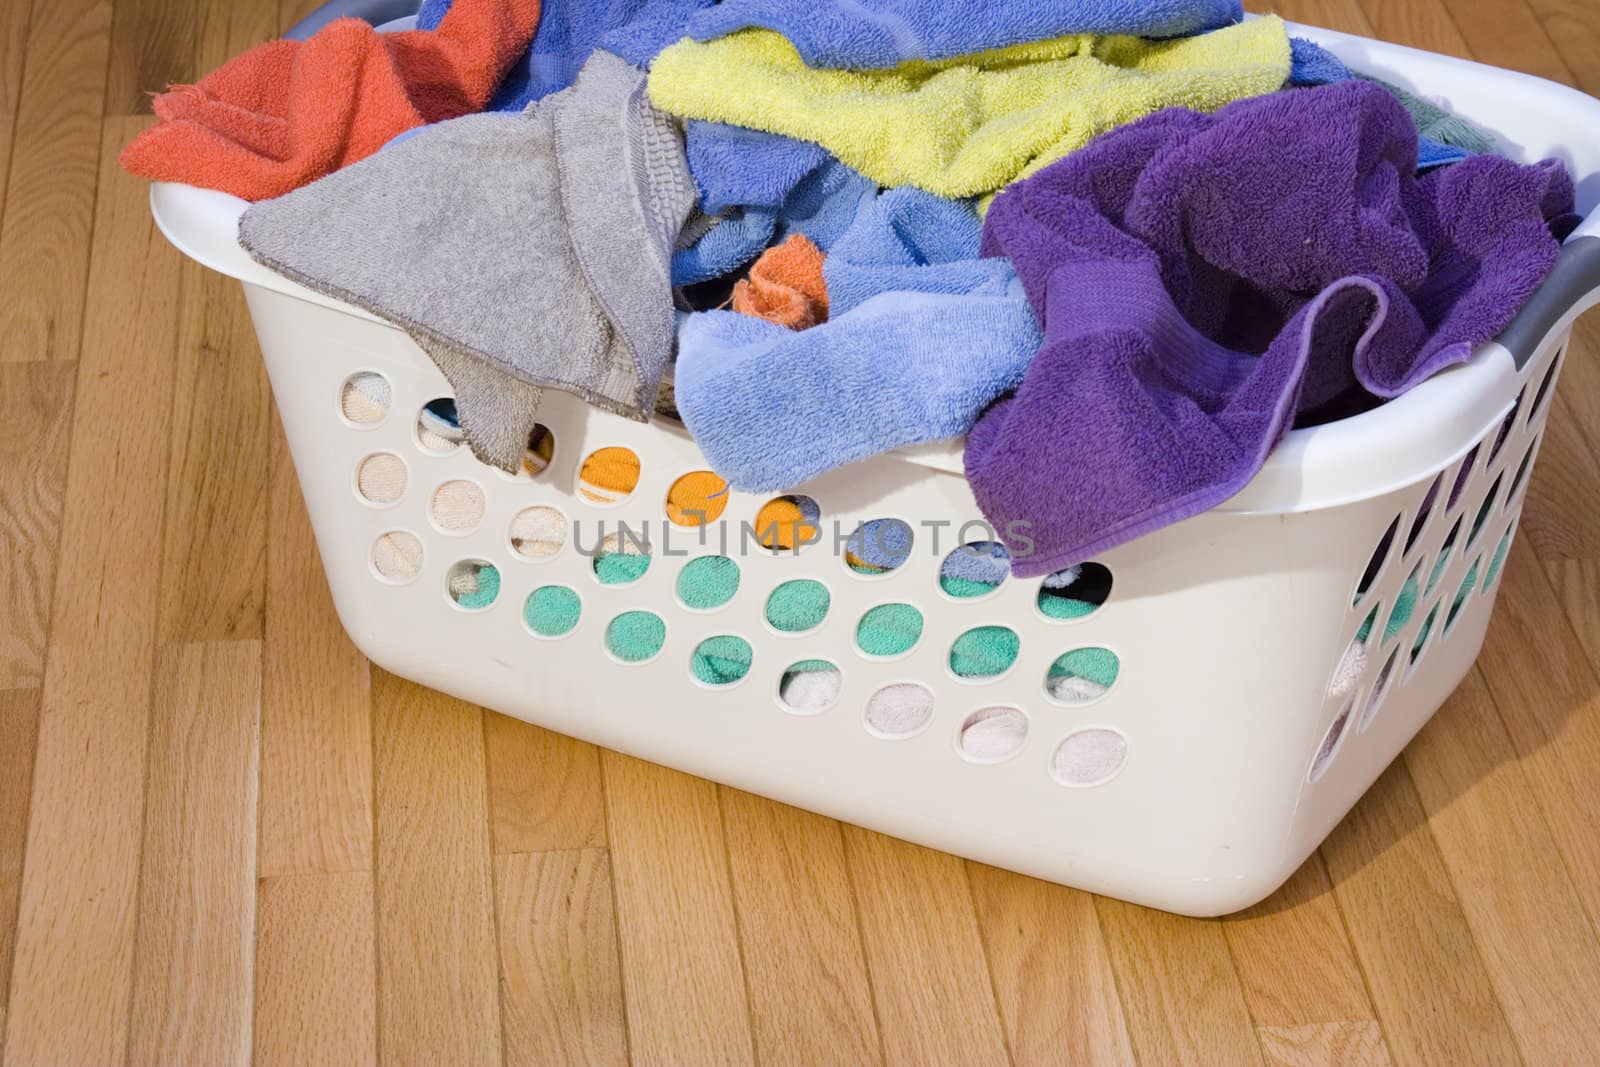 laundry basket full of clean towels on hardwood floor